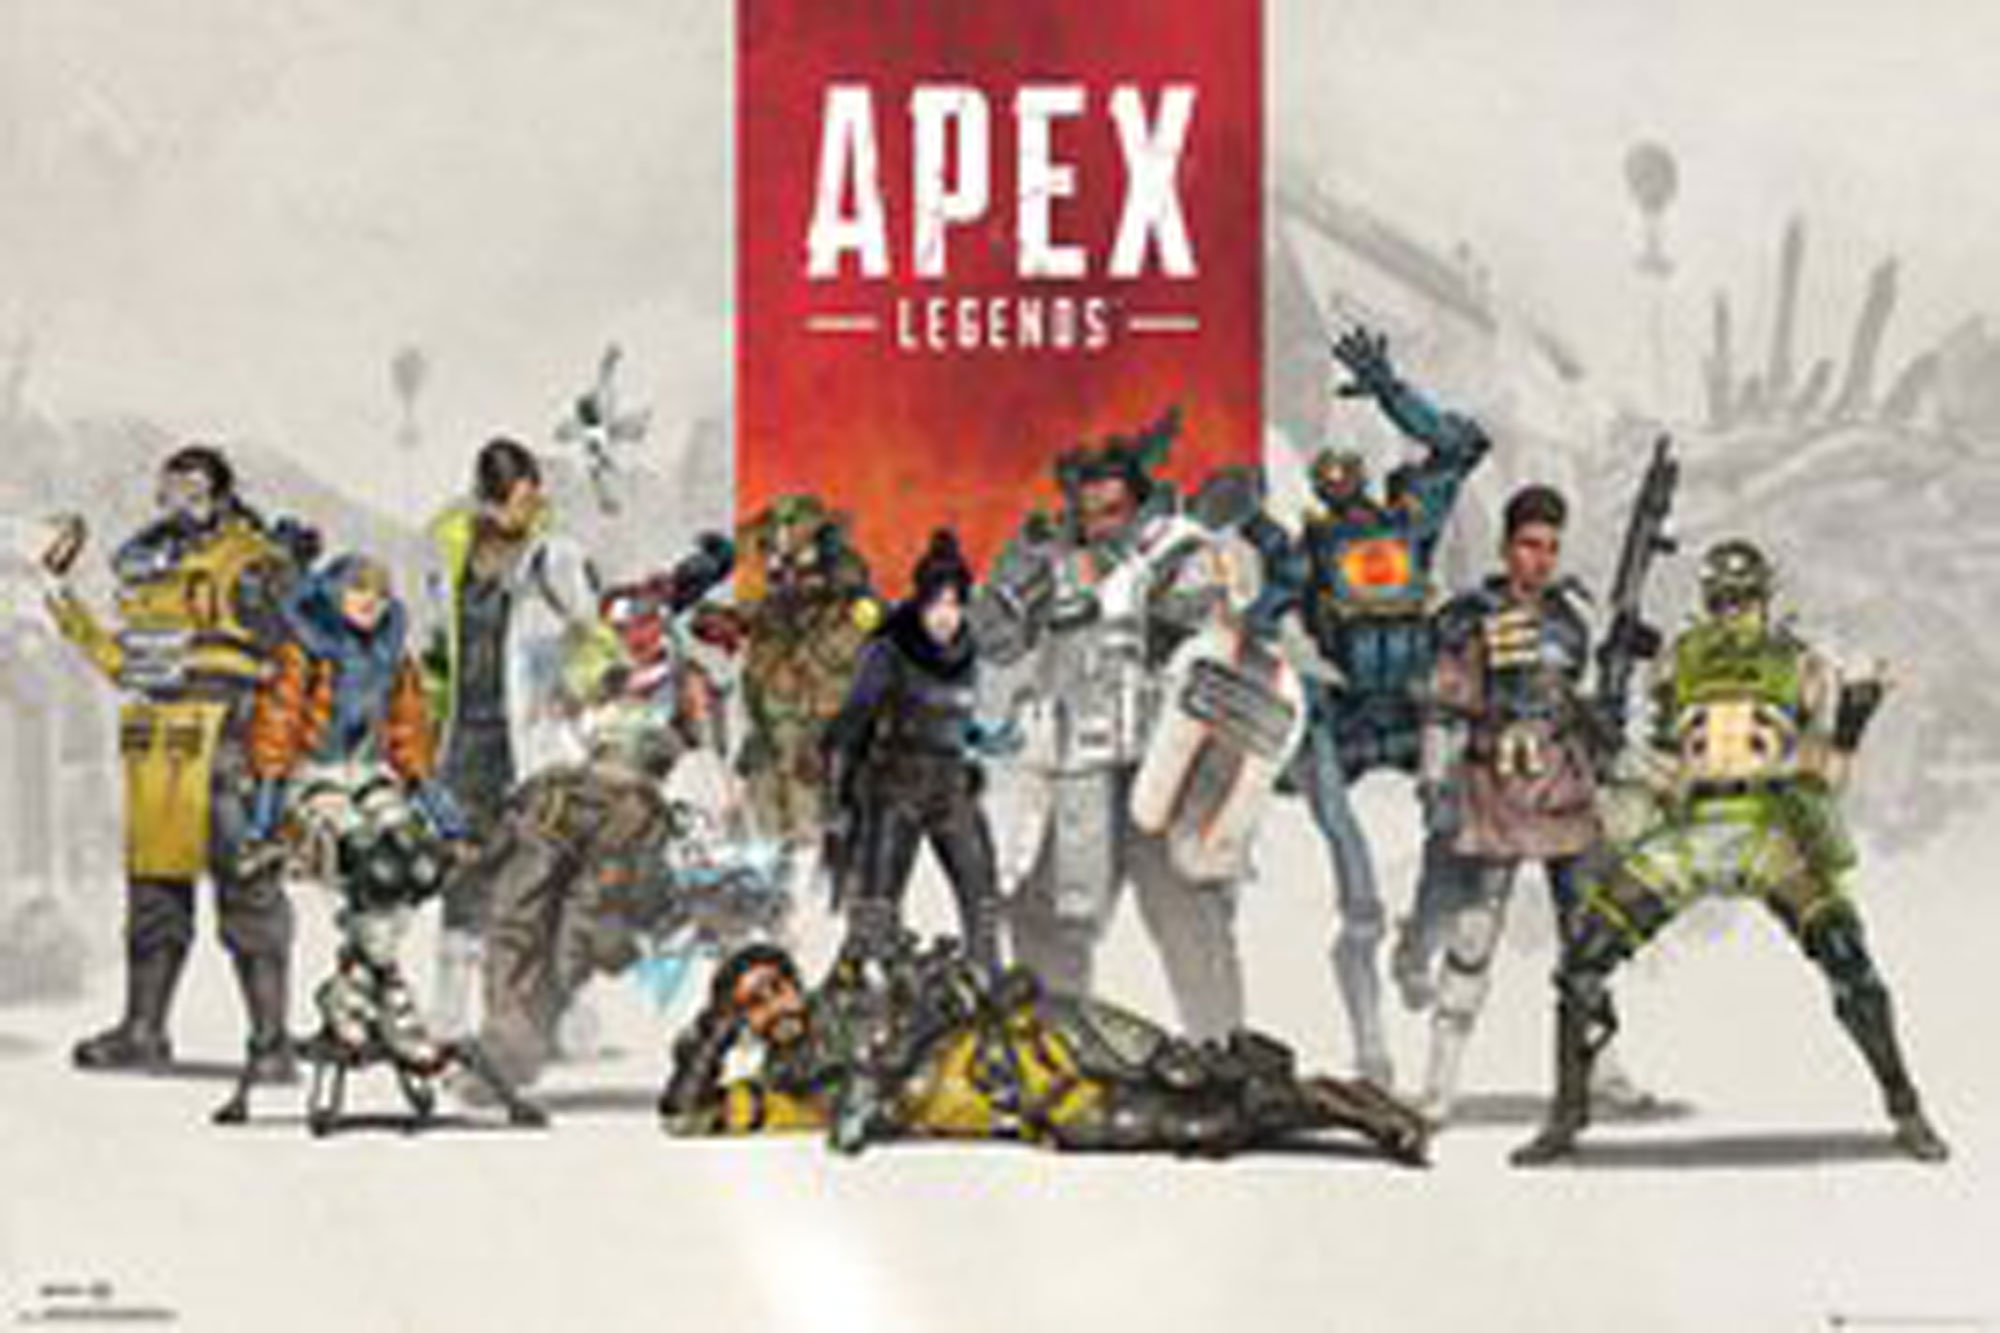 Apex Group Legends -